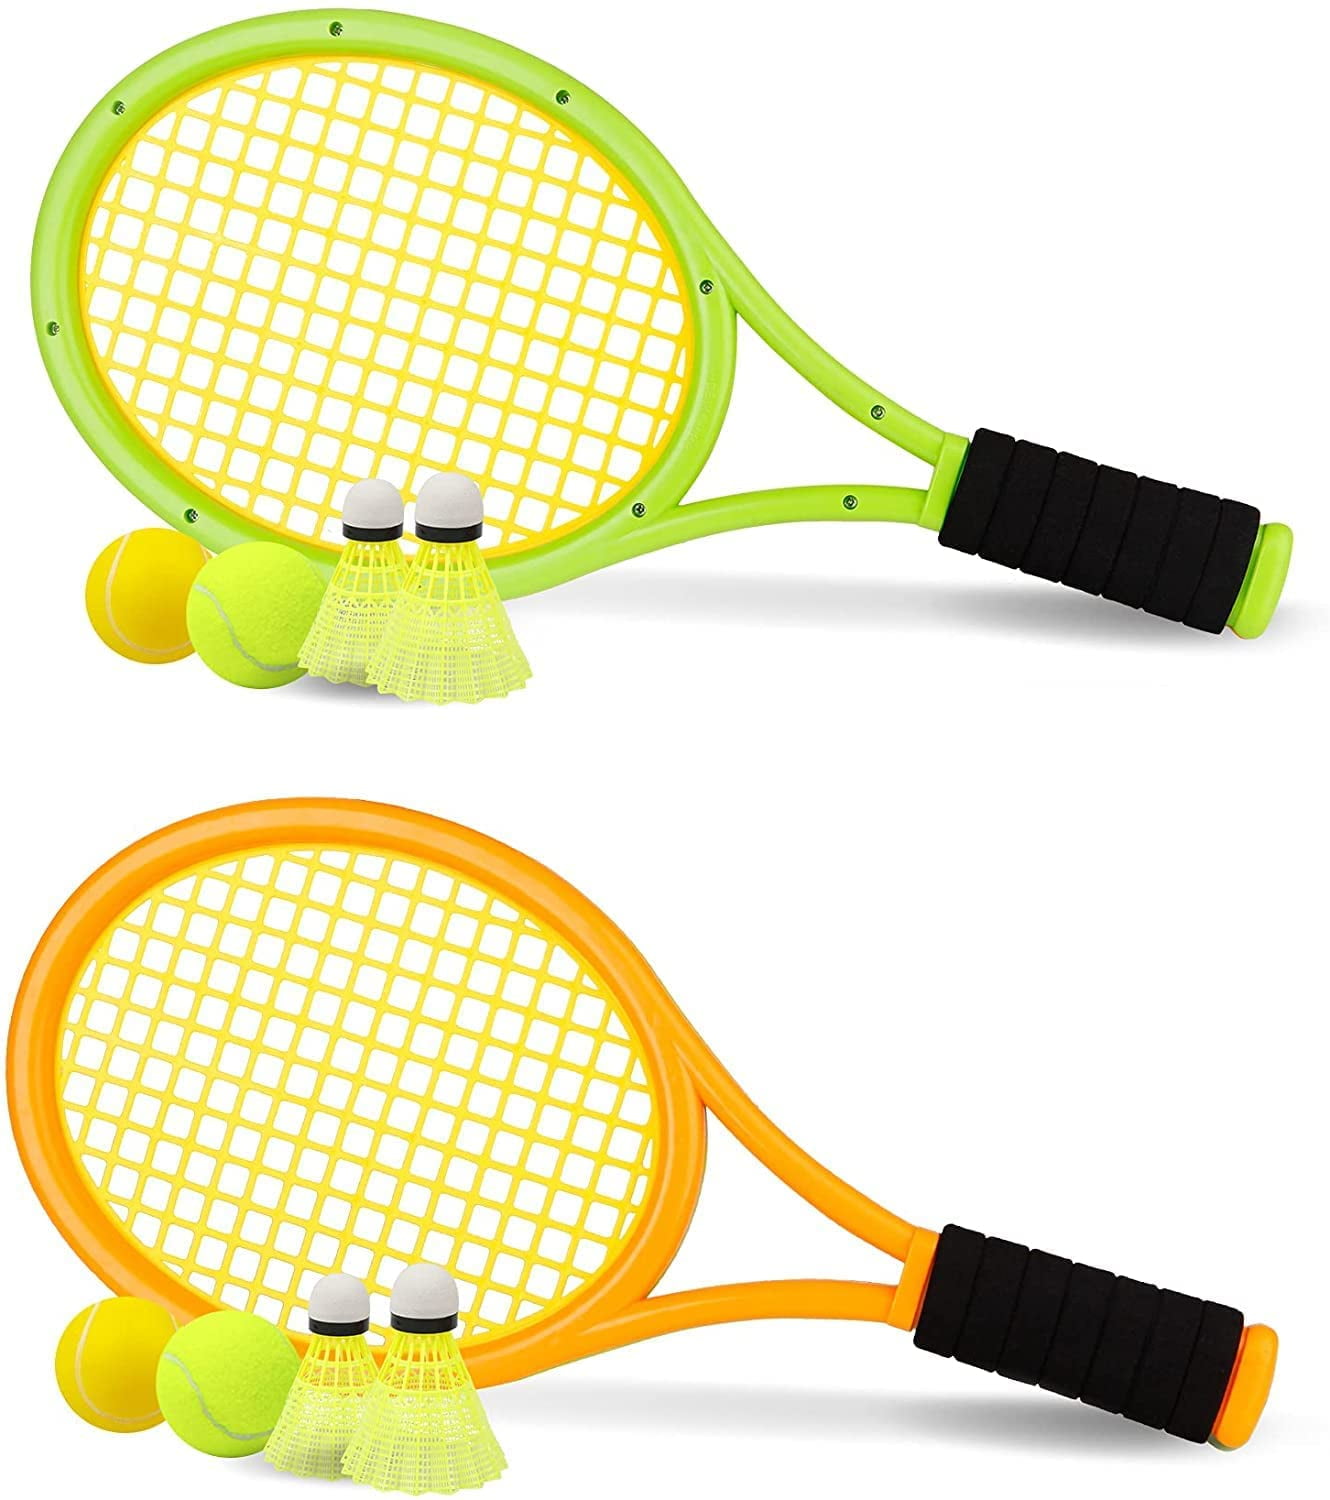 Children's Tennis Racket Bat Various Sizes 19-25in Sport Outdoor Fun Game Play 